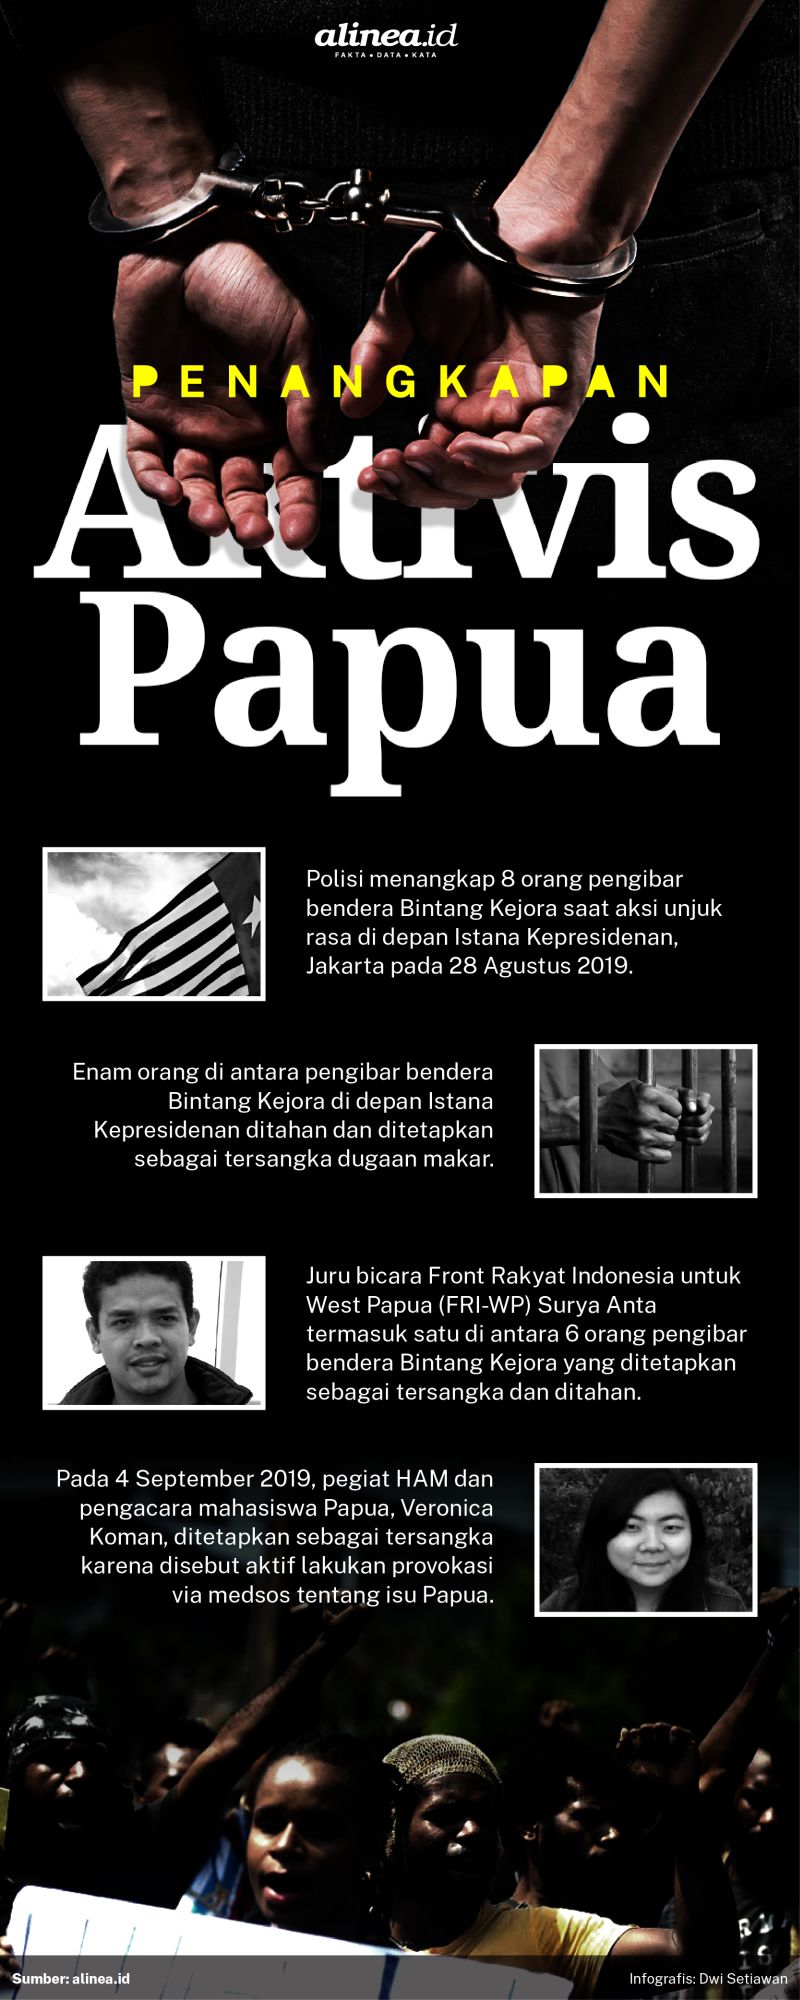 Setelah kerusuhan di beberapa kota di Papua dan Papua Barat, polisi sigap menangkap aktivis Papua. Alinea.id/Oky Diaz.